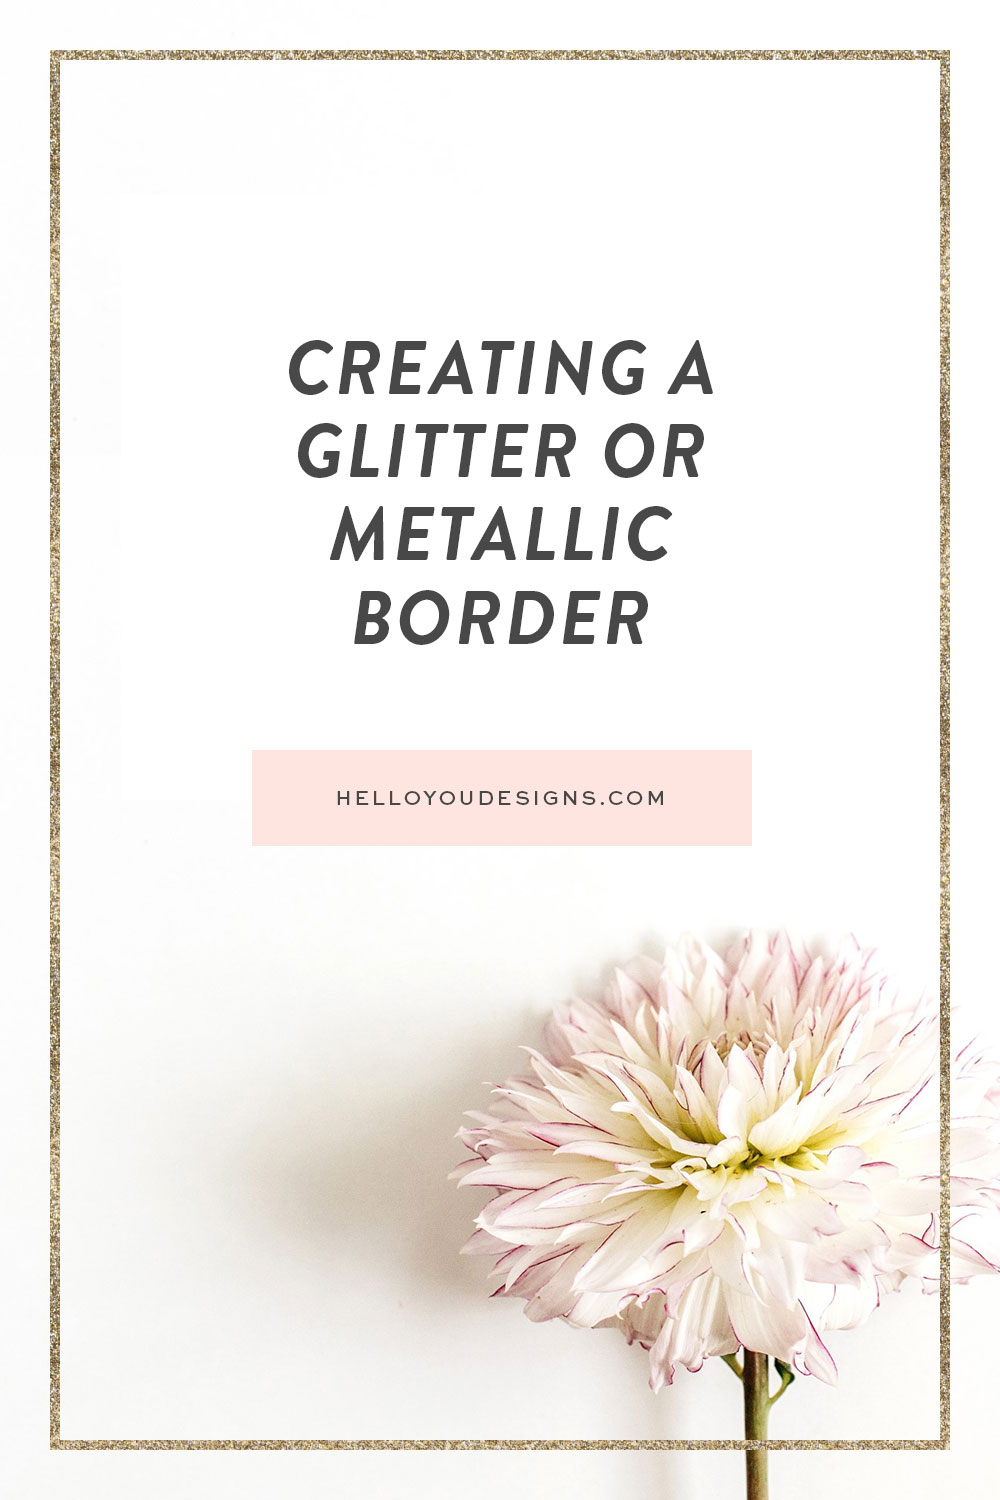 Creating a metallic or glitter border